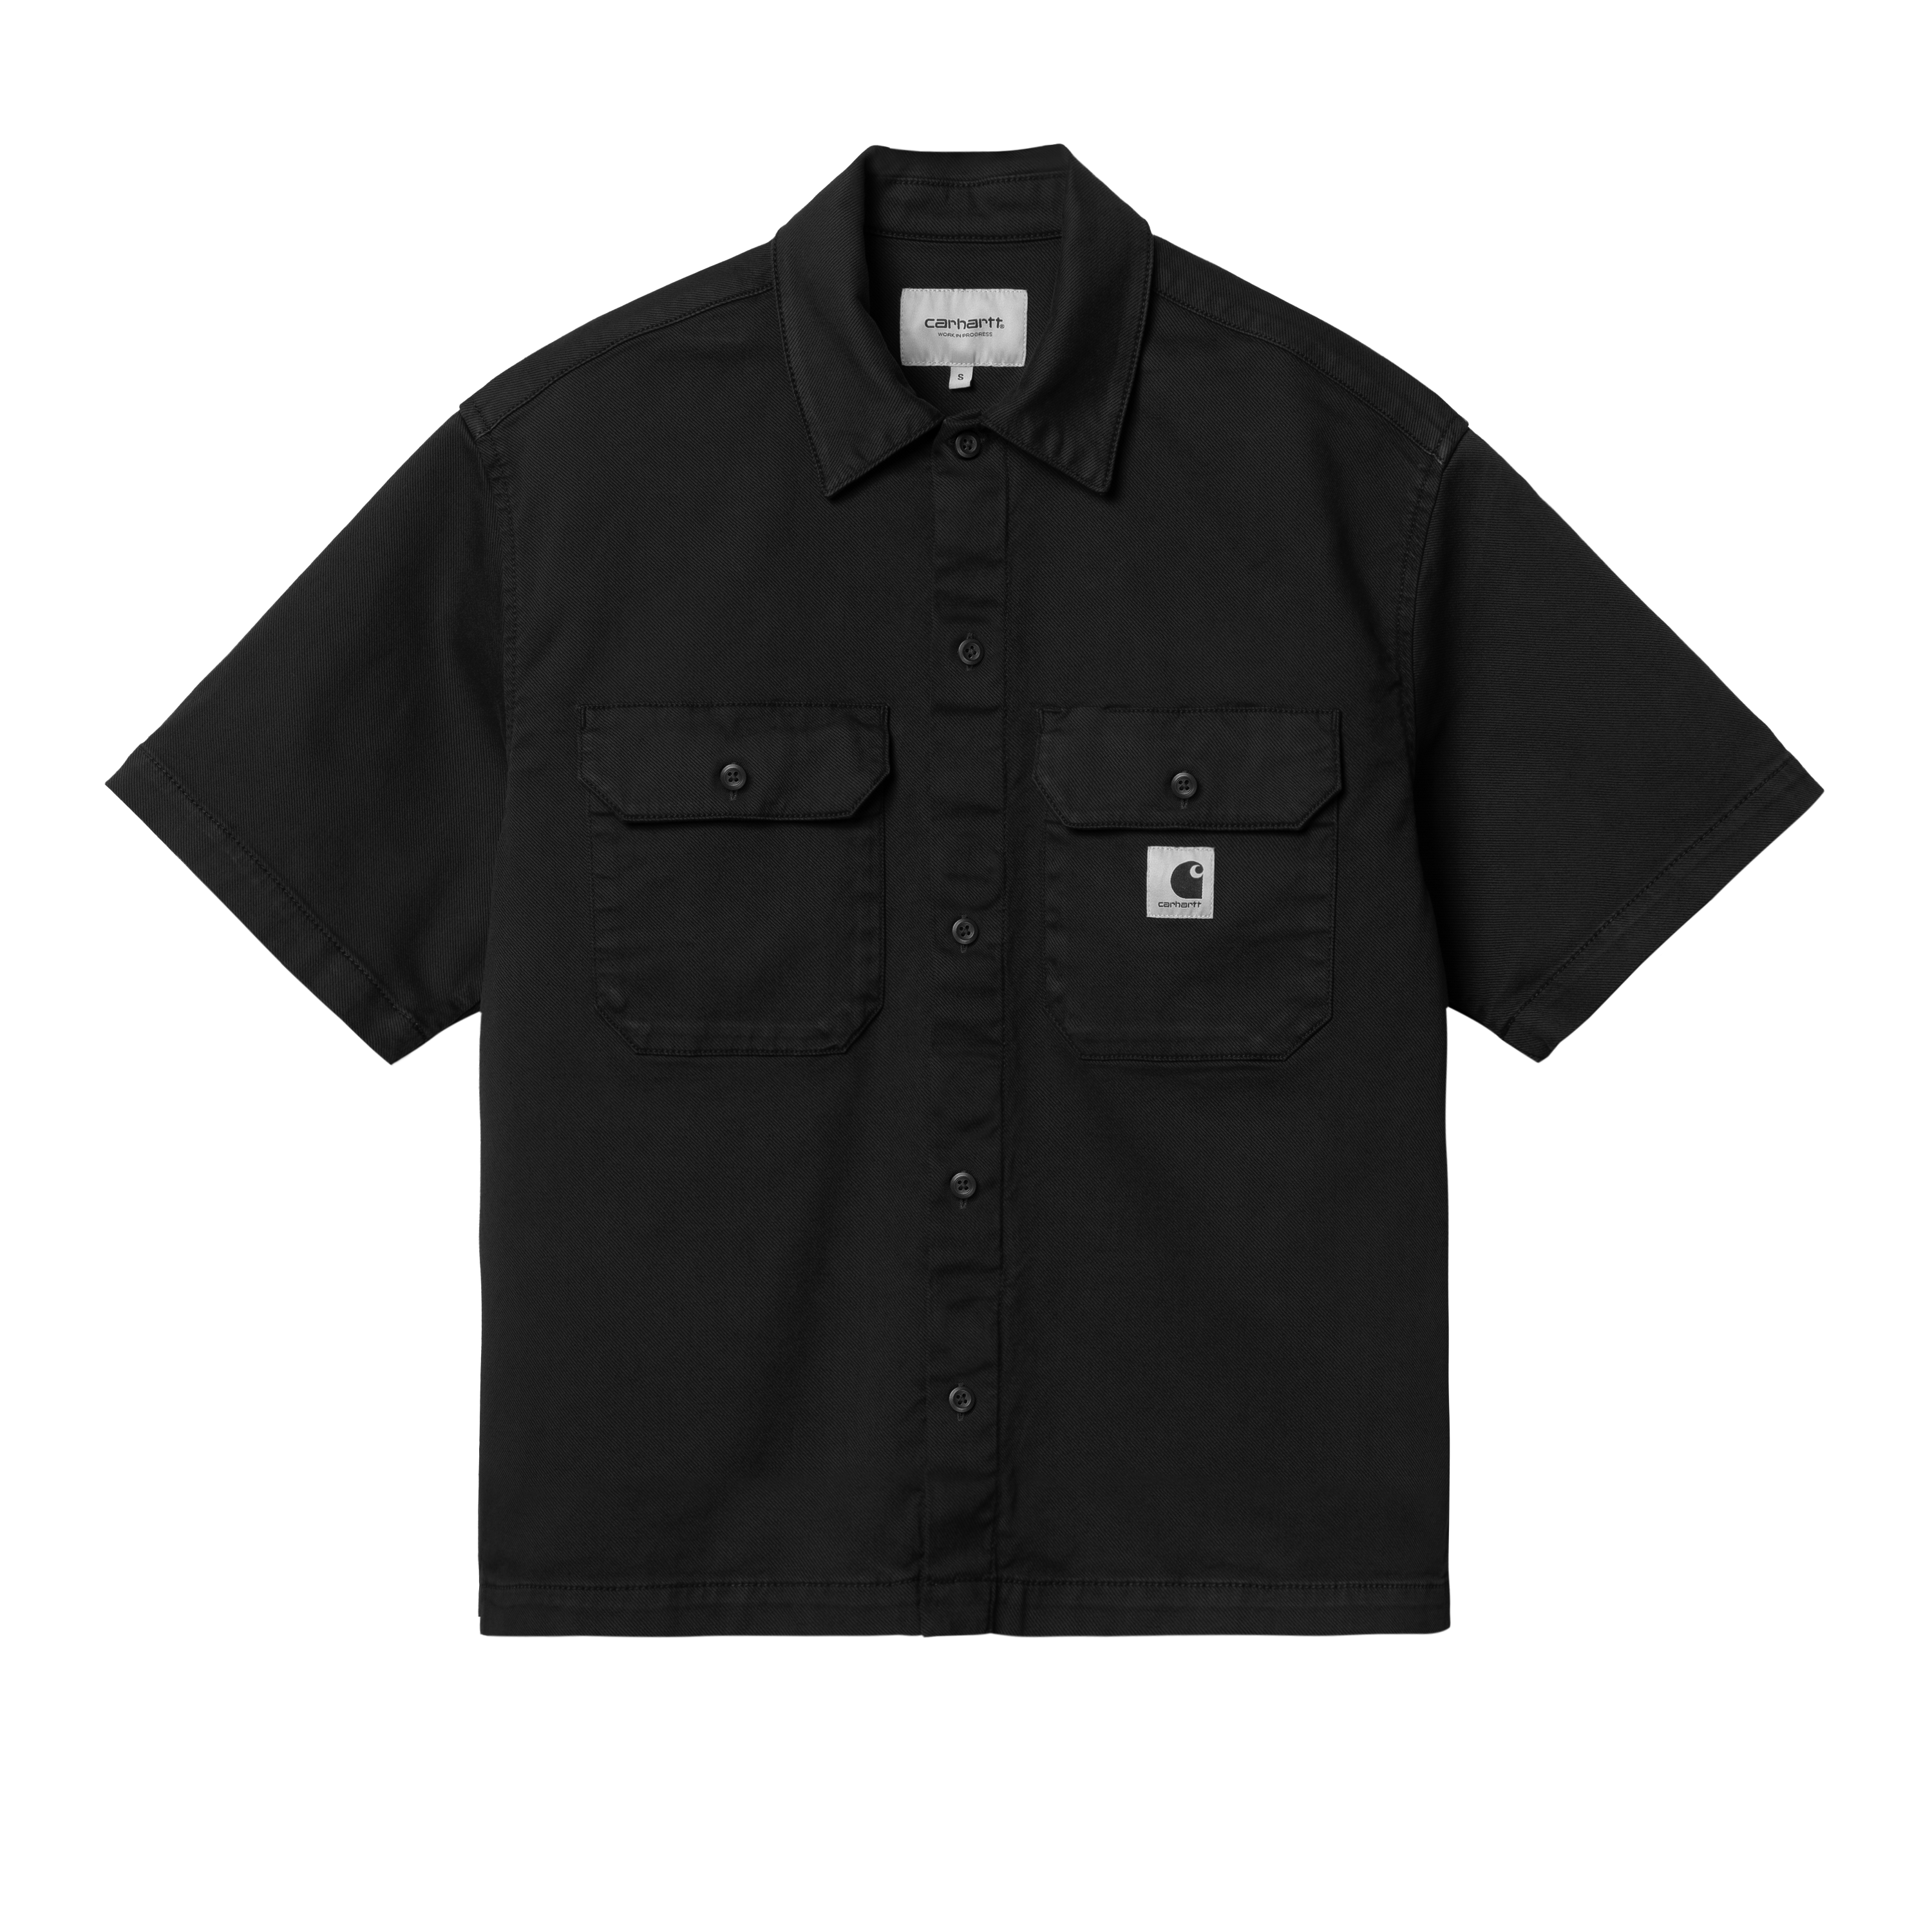 Carhartt WIP Women’s Short Sleeve Craft Shirt in Schwarz